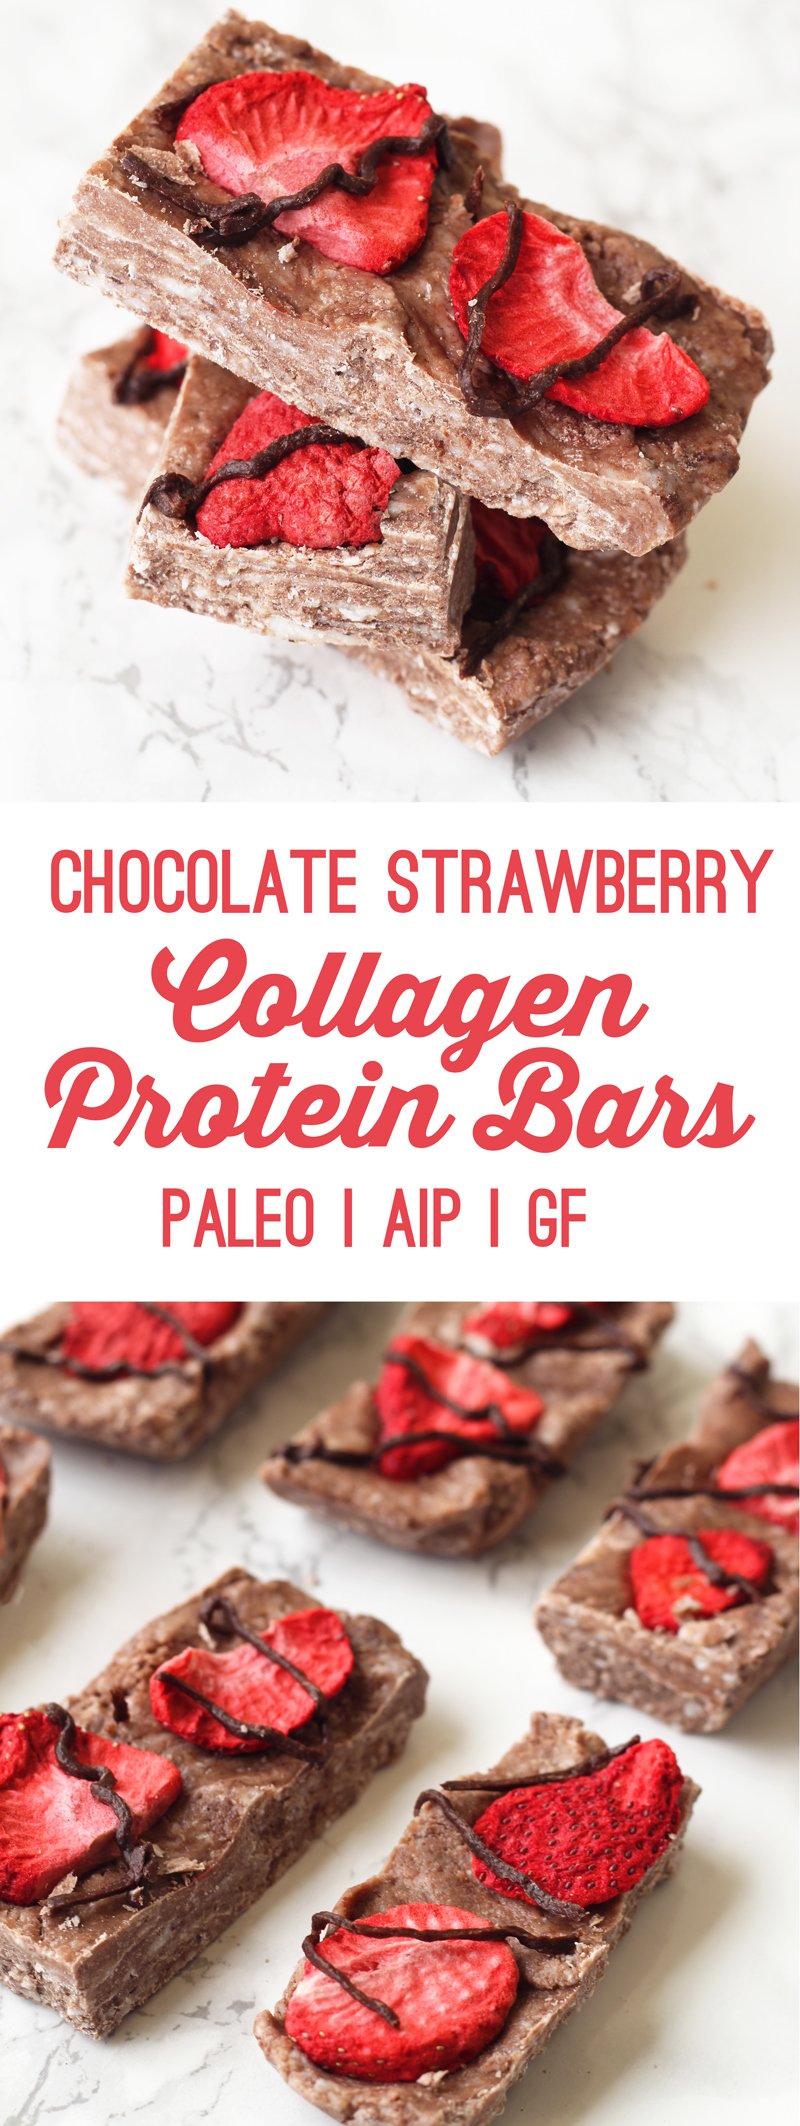 Chocolate Strawberry Collagen Protein Bars (AIP, Paleo, GF)